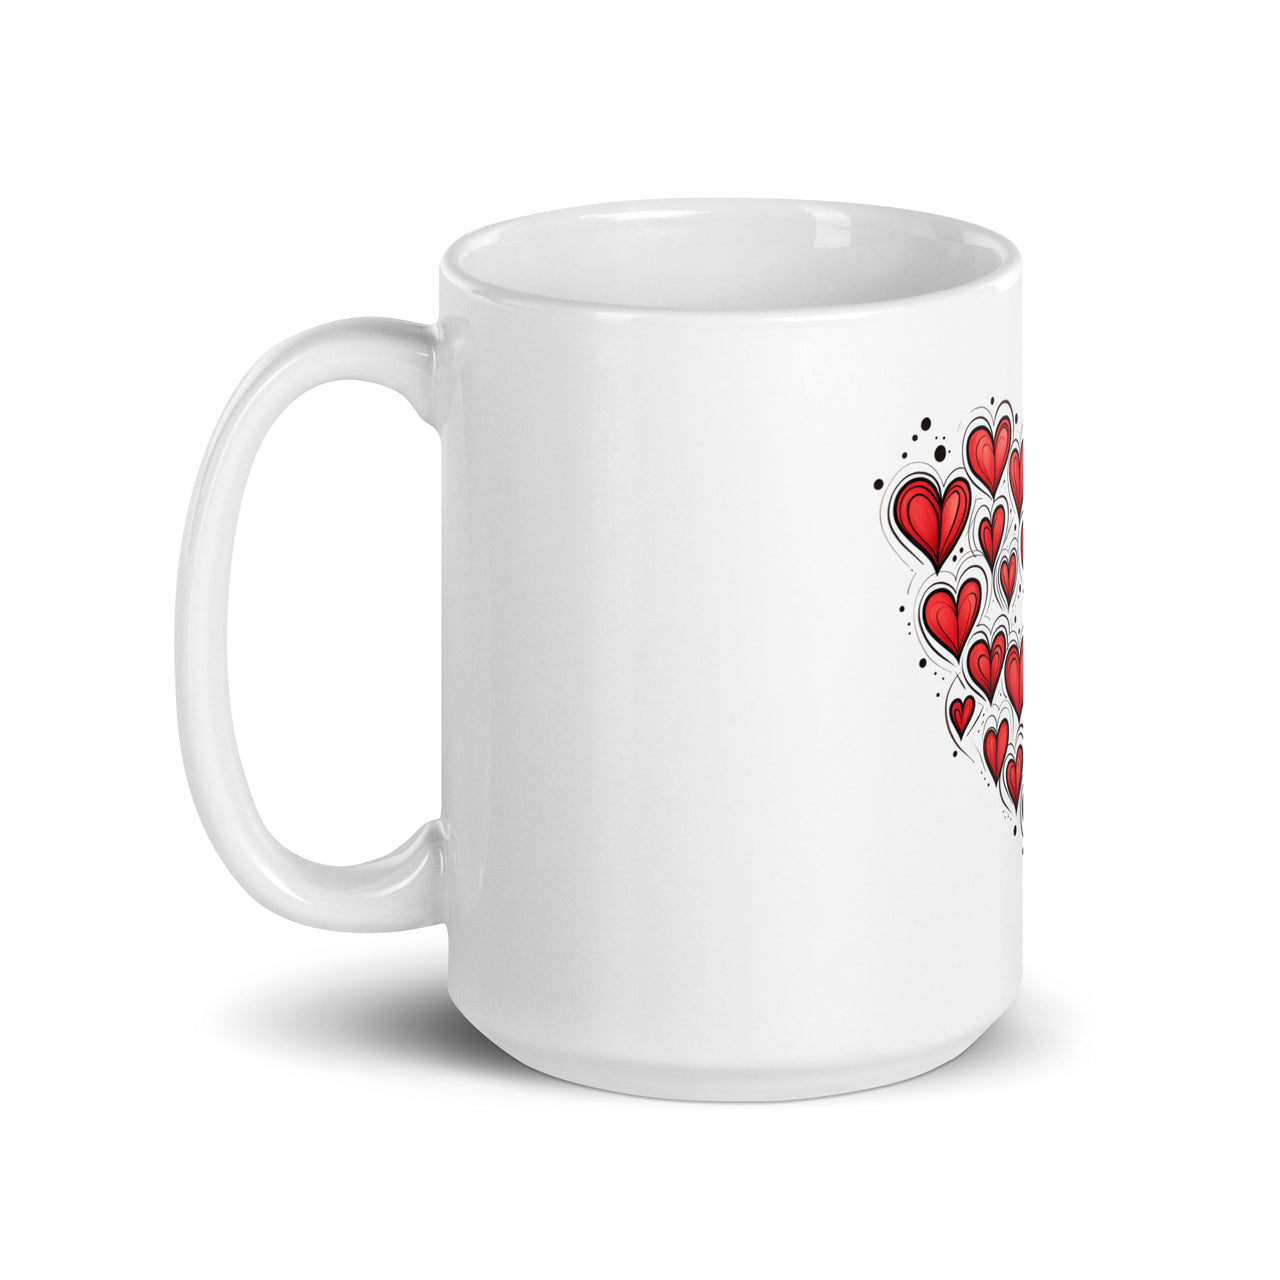 Love Radiates: Sketched Hearts White Mug